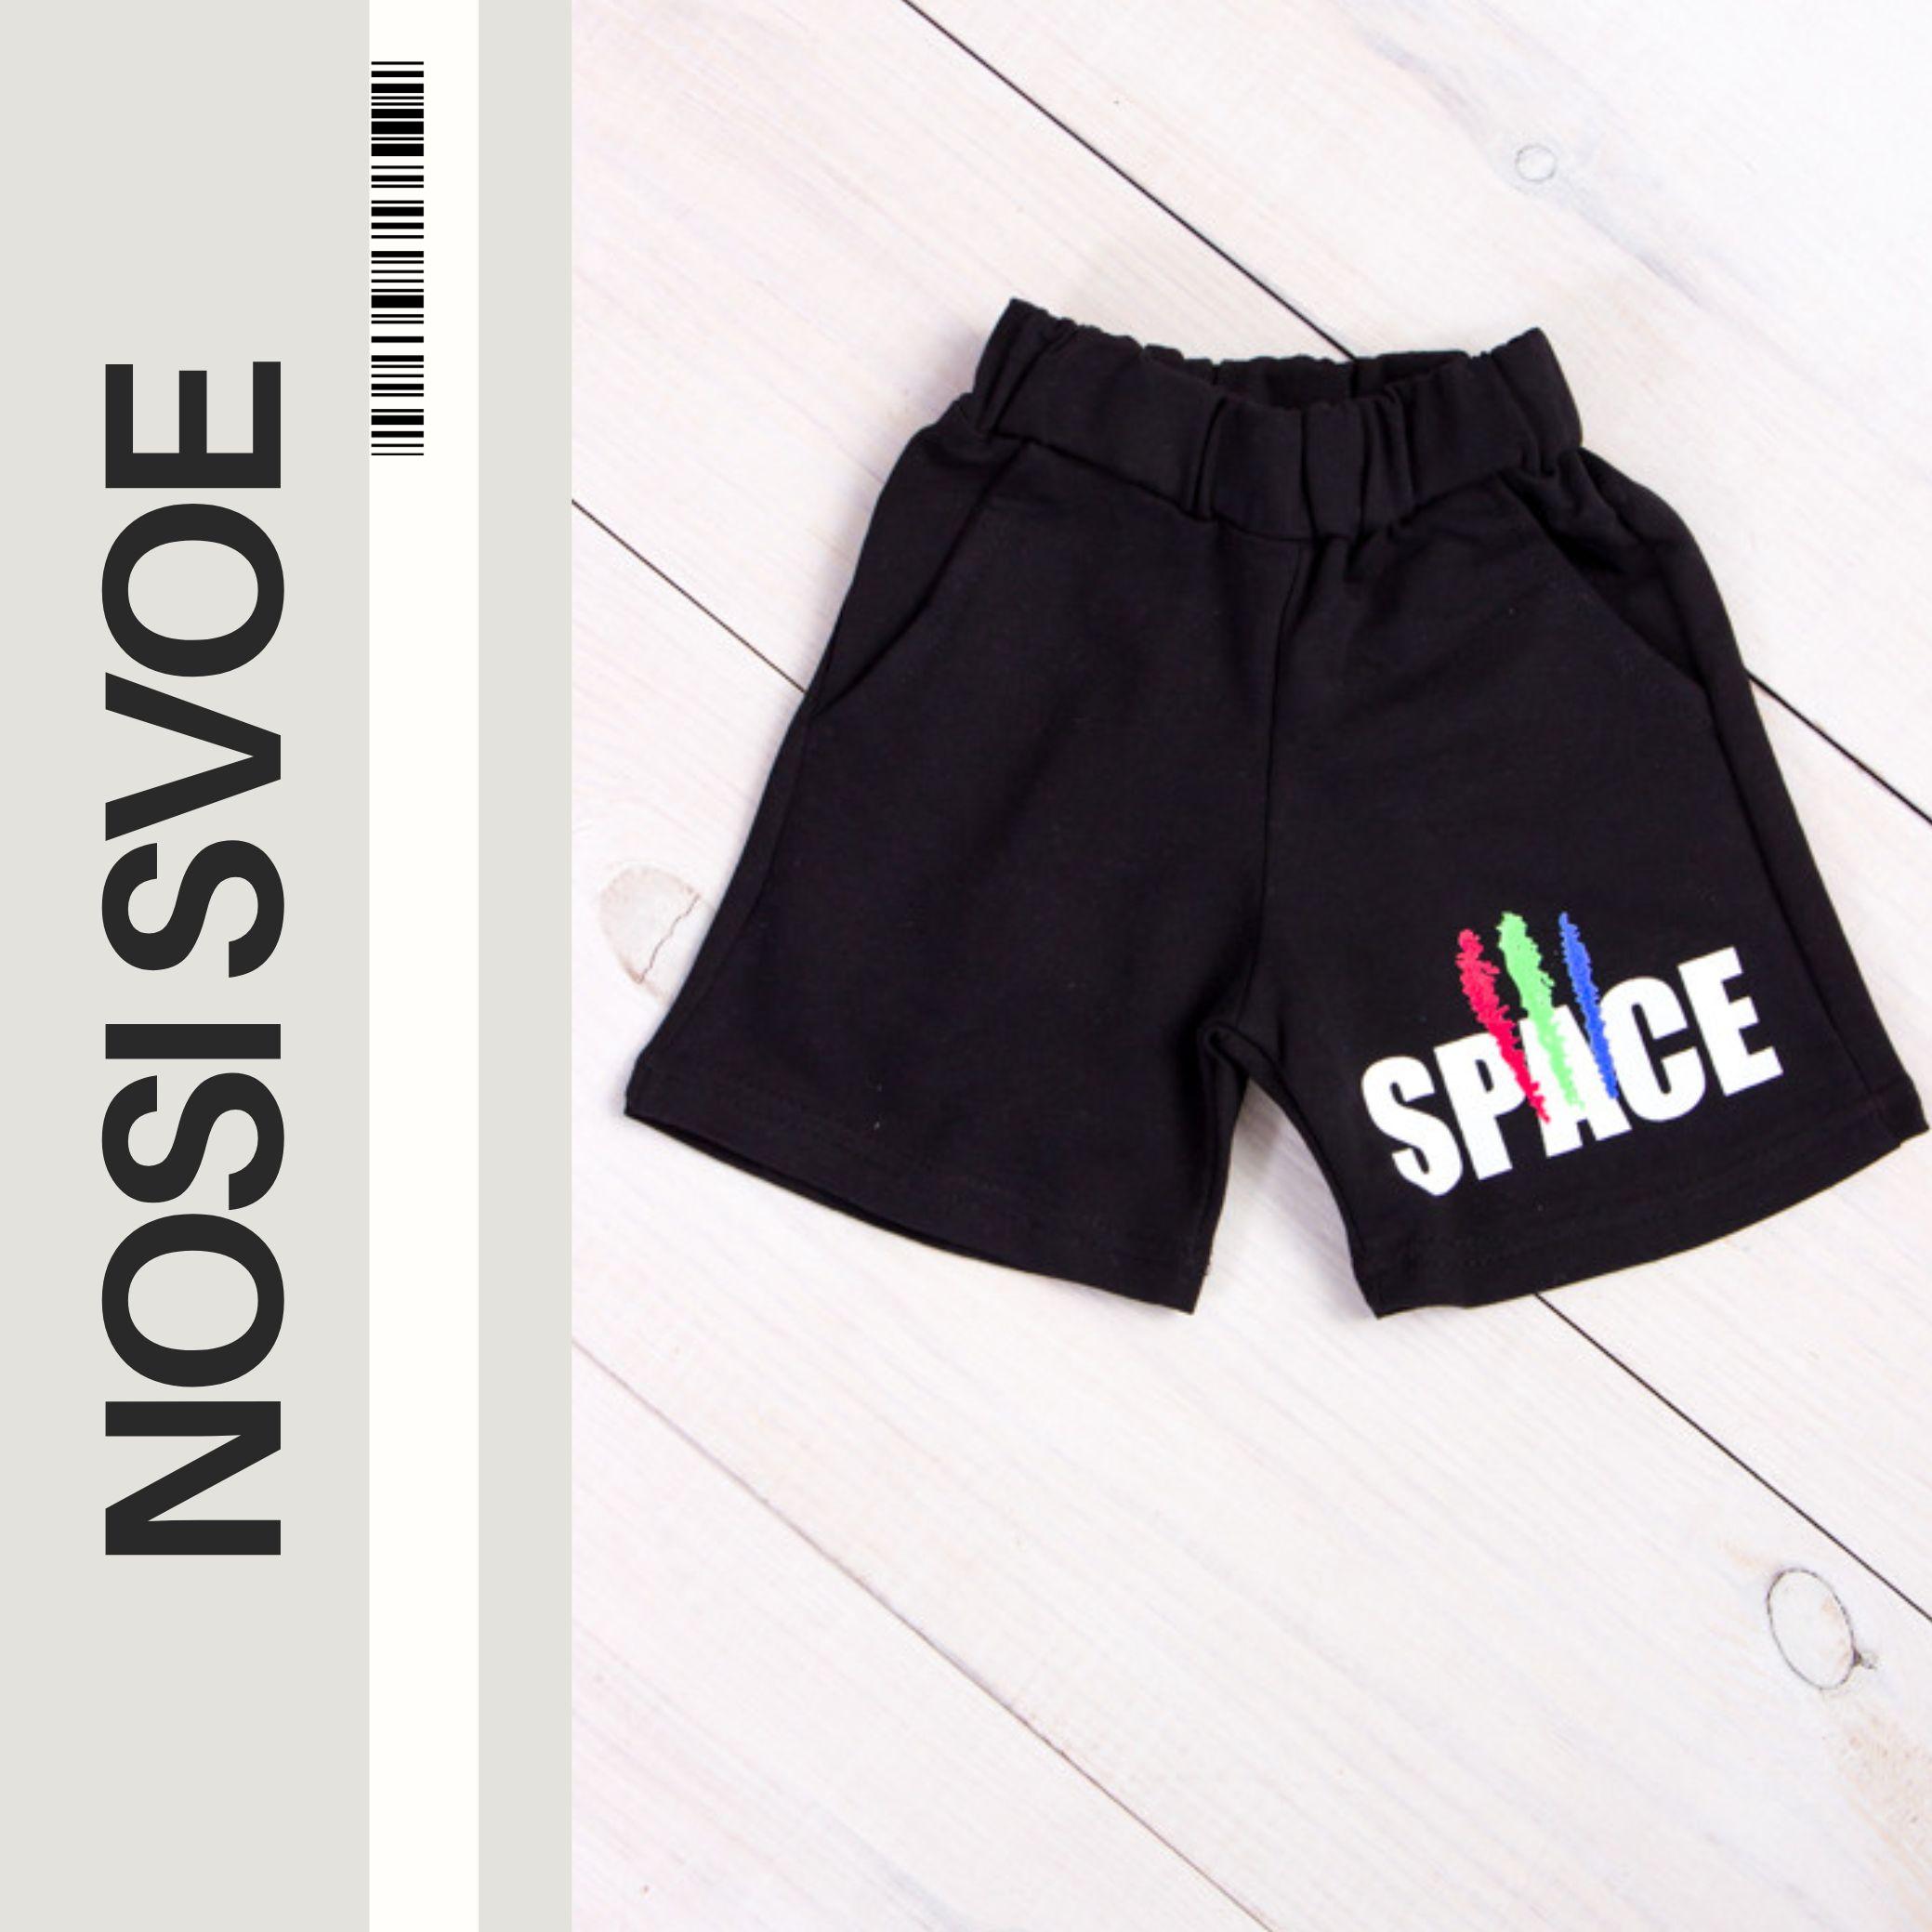 НС Shorts (boys), Summer, Nosi svoe 6136-057-33-1